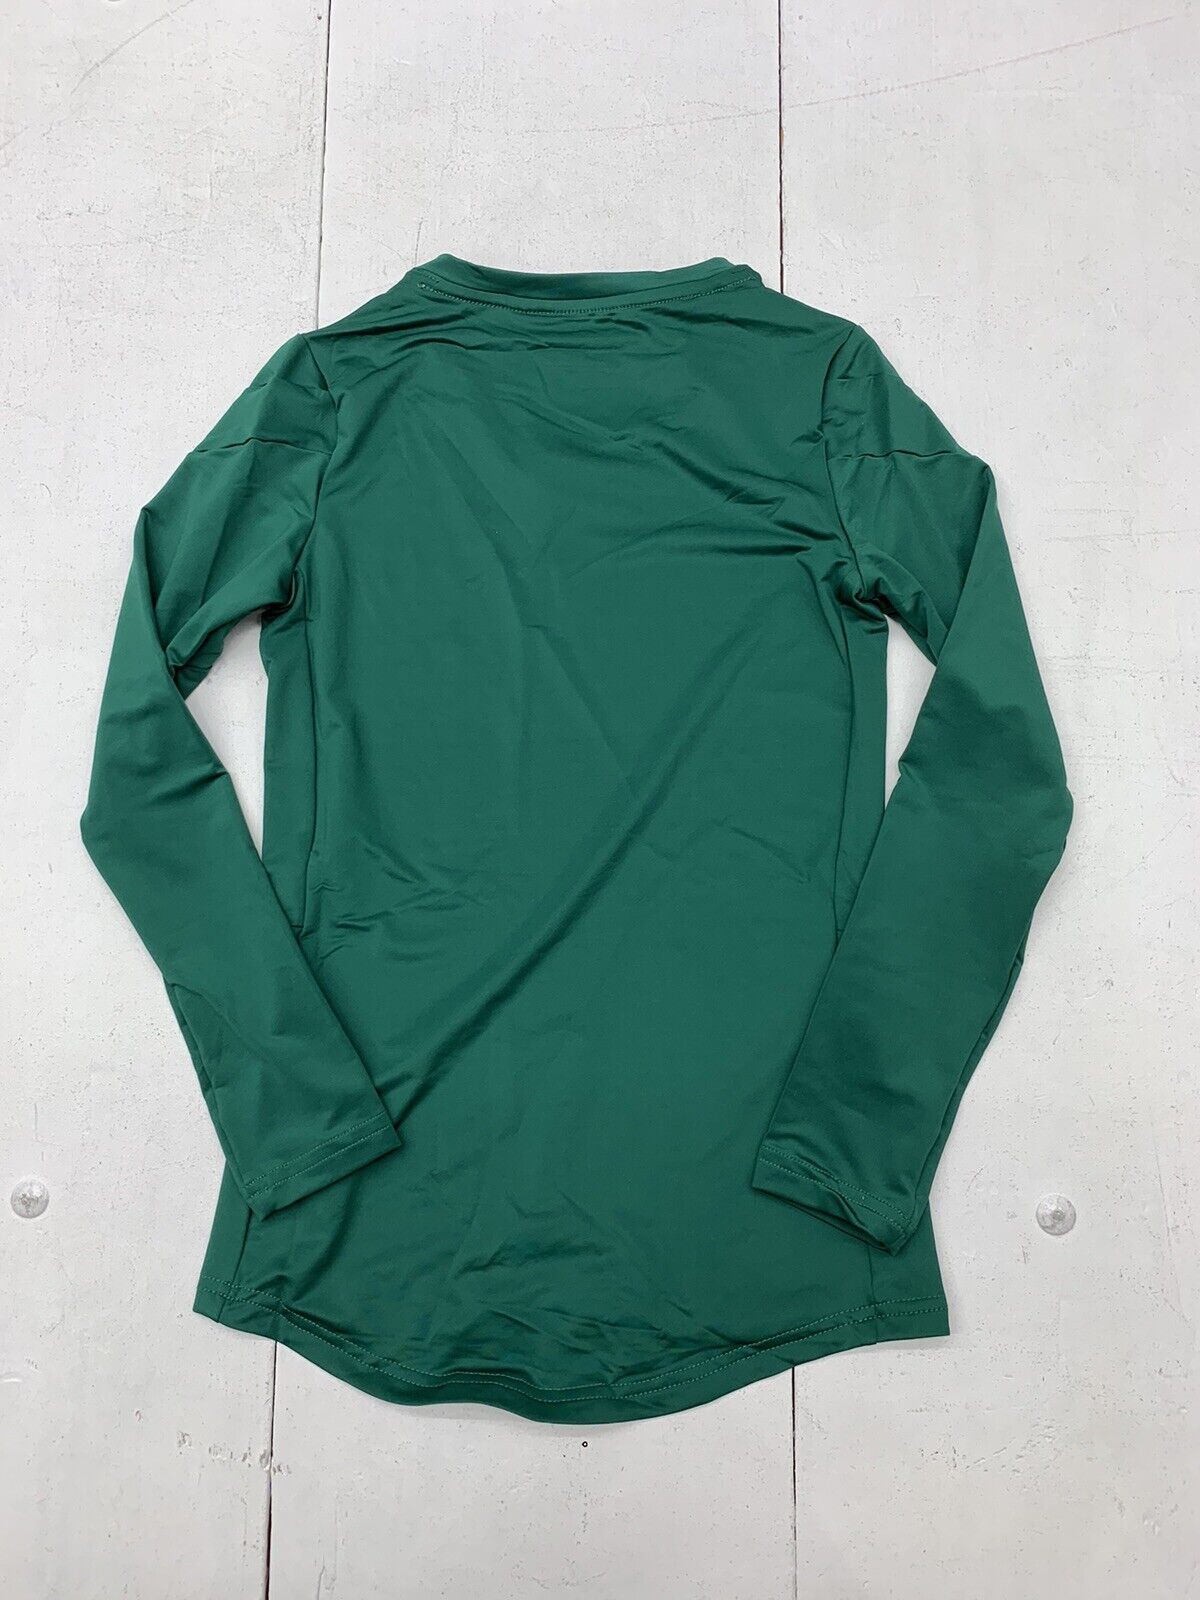 Mizuno Womens Green Long Sleeve Athletic Shirt Size XL - beyond exchange